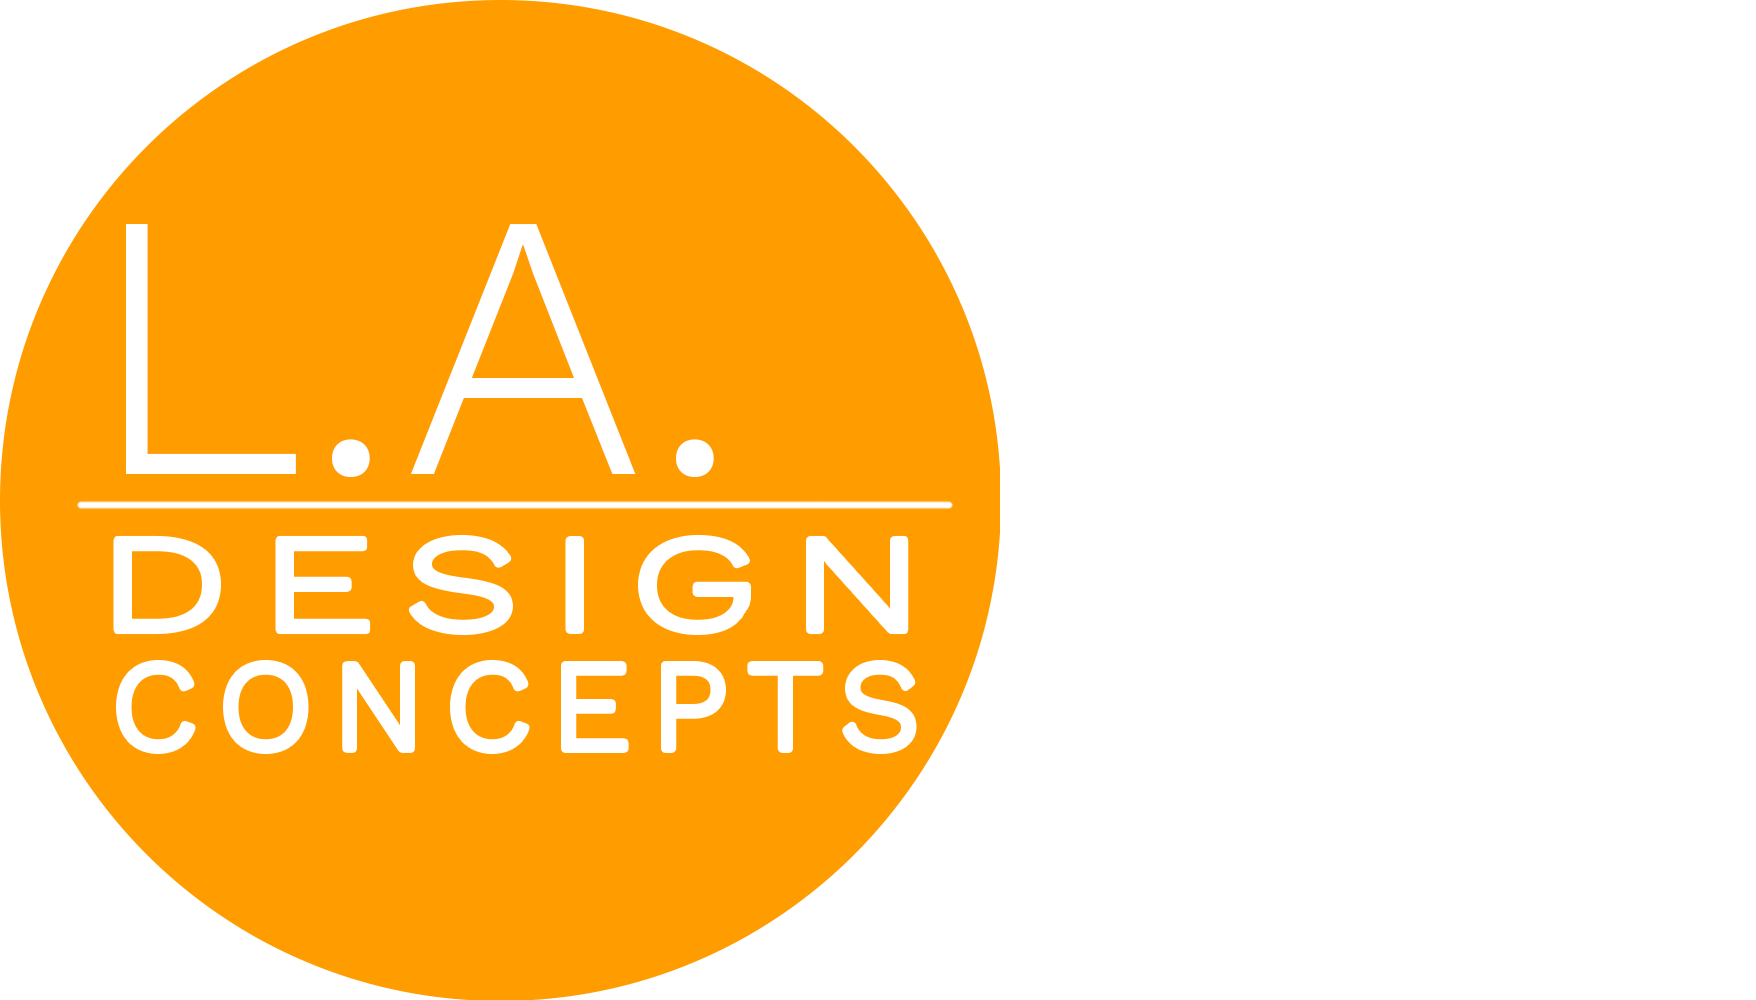 LA-design-concepts-project-logo